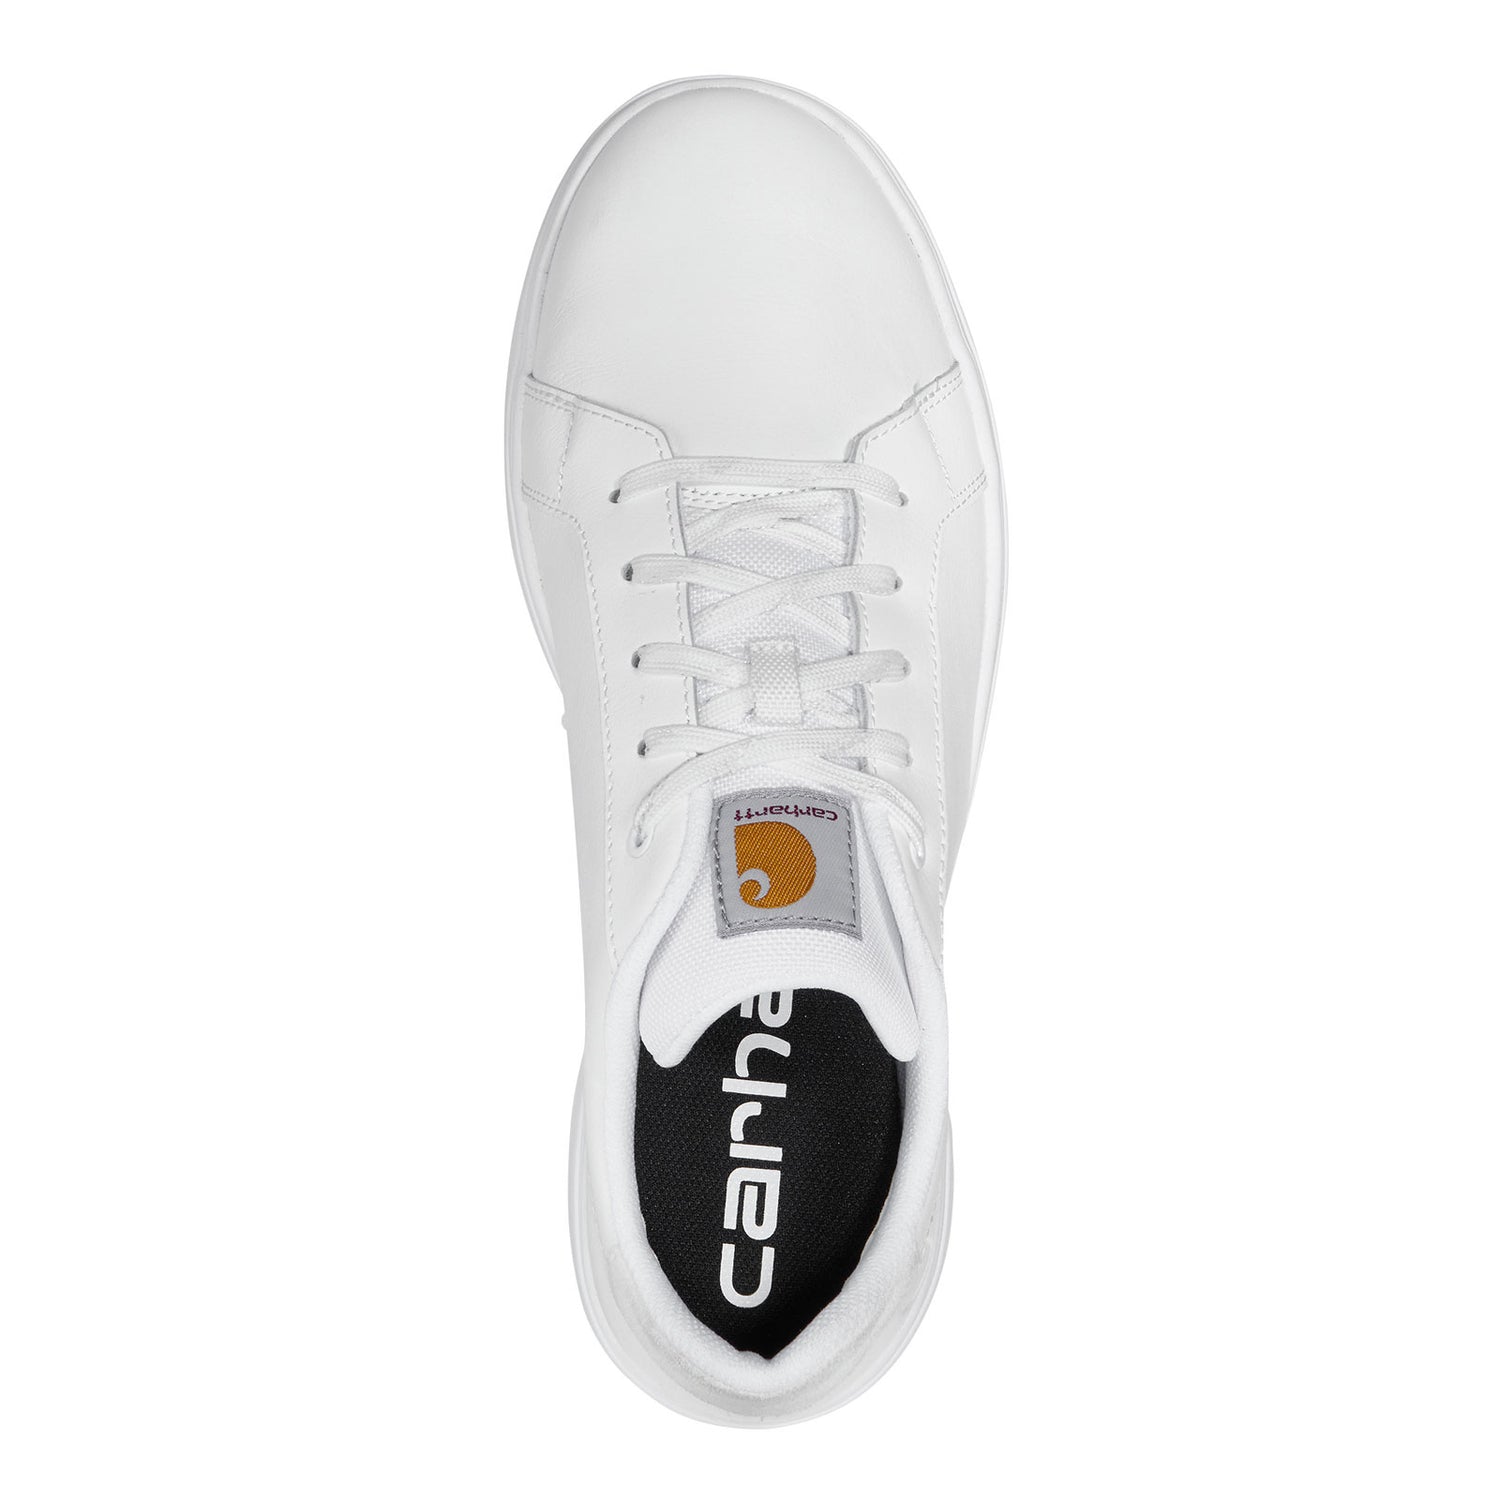 Peltz Shoes  Women's Carhartt Detroit Non-Slip Soft Toe Work Shoe White FC2150-W